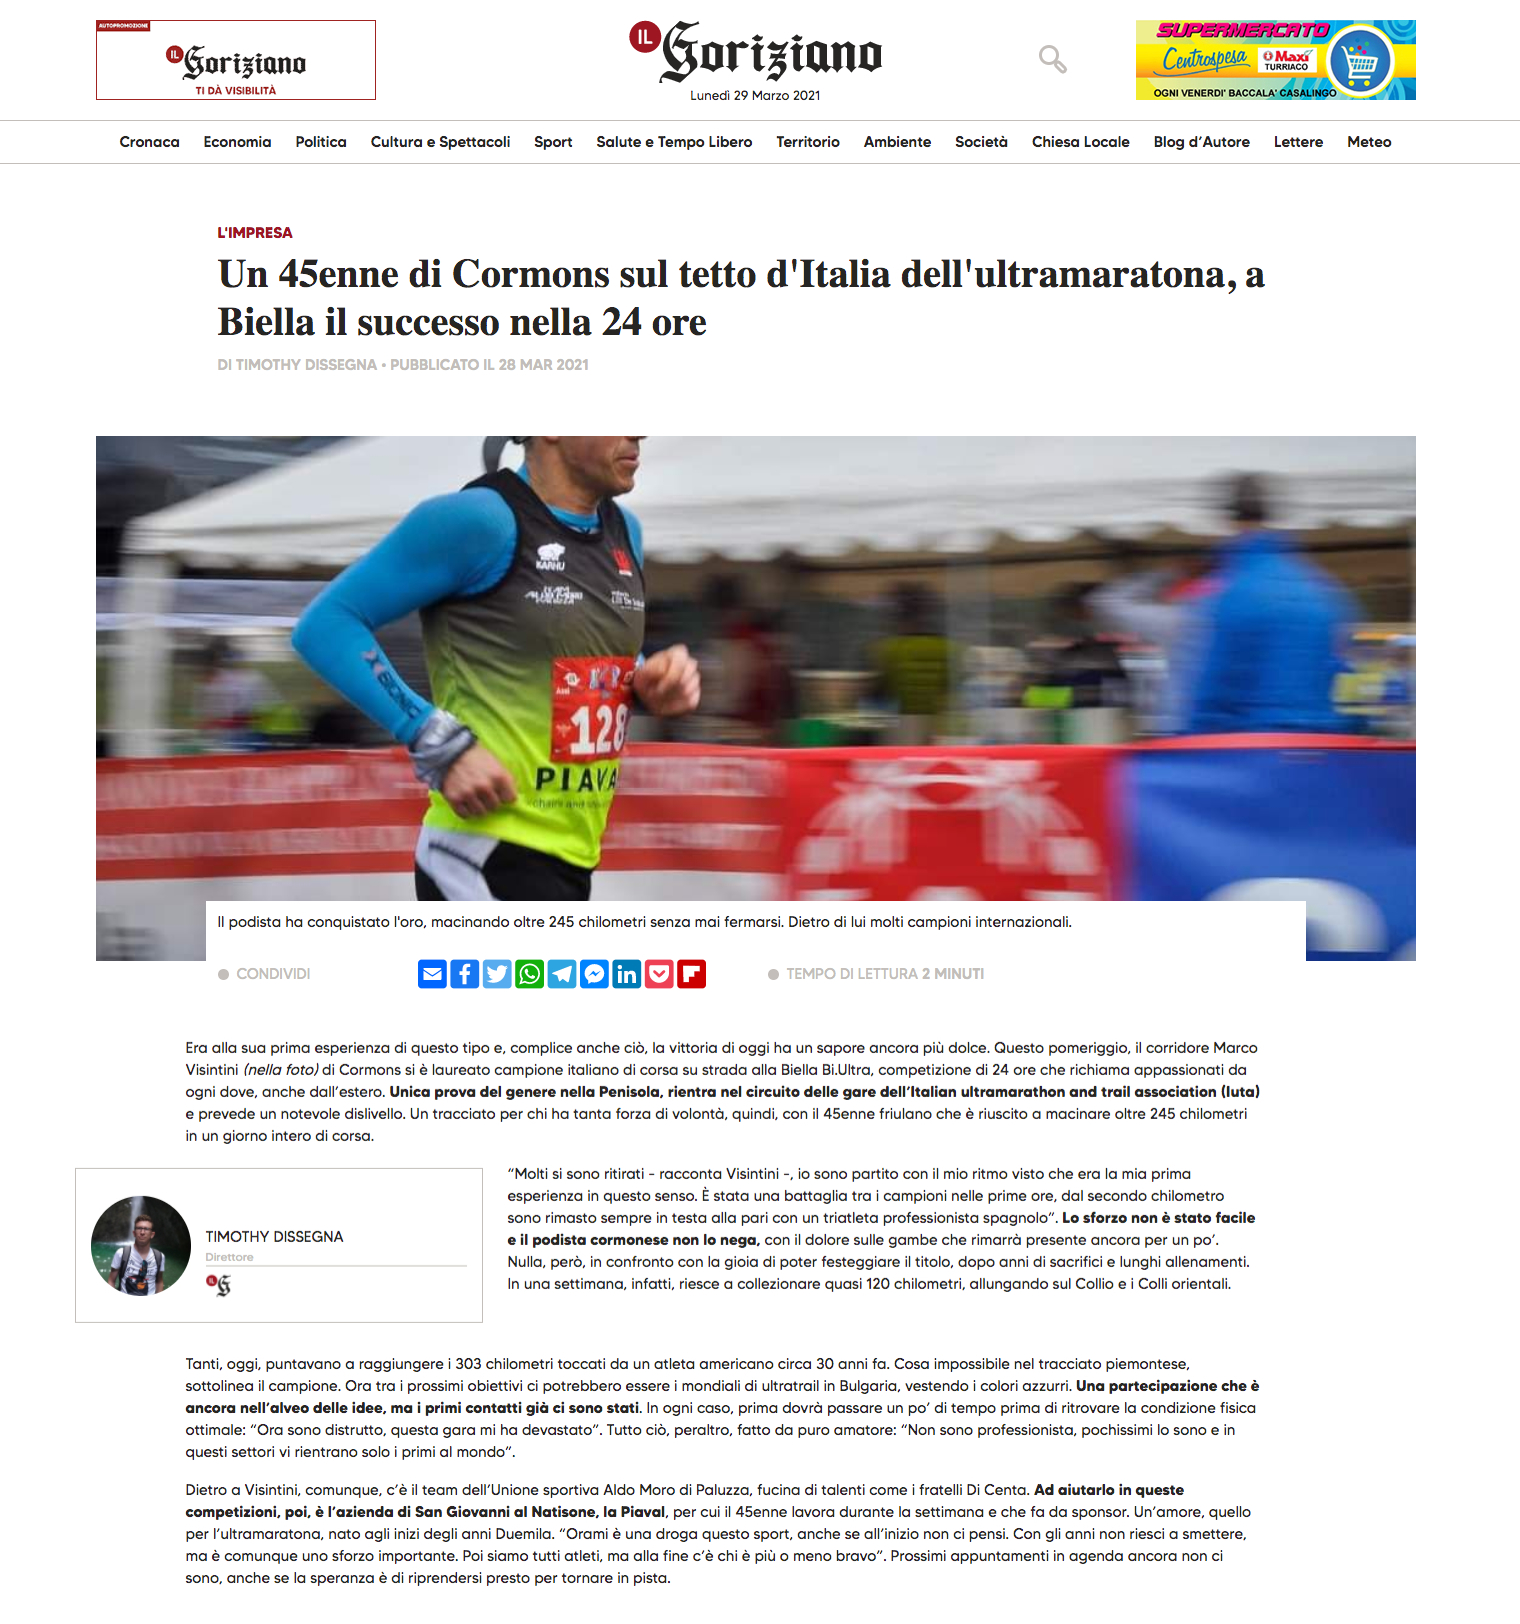 Il Goriziano talks about Piaval sponsorship for Marco Visintini